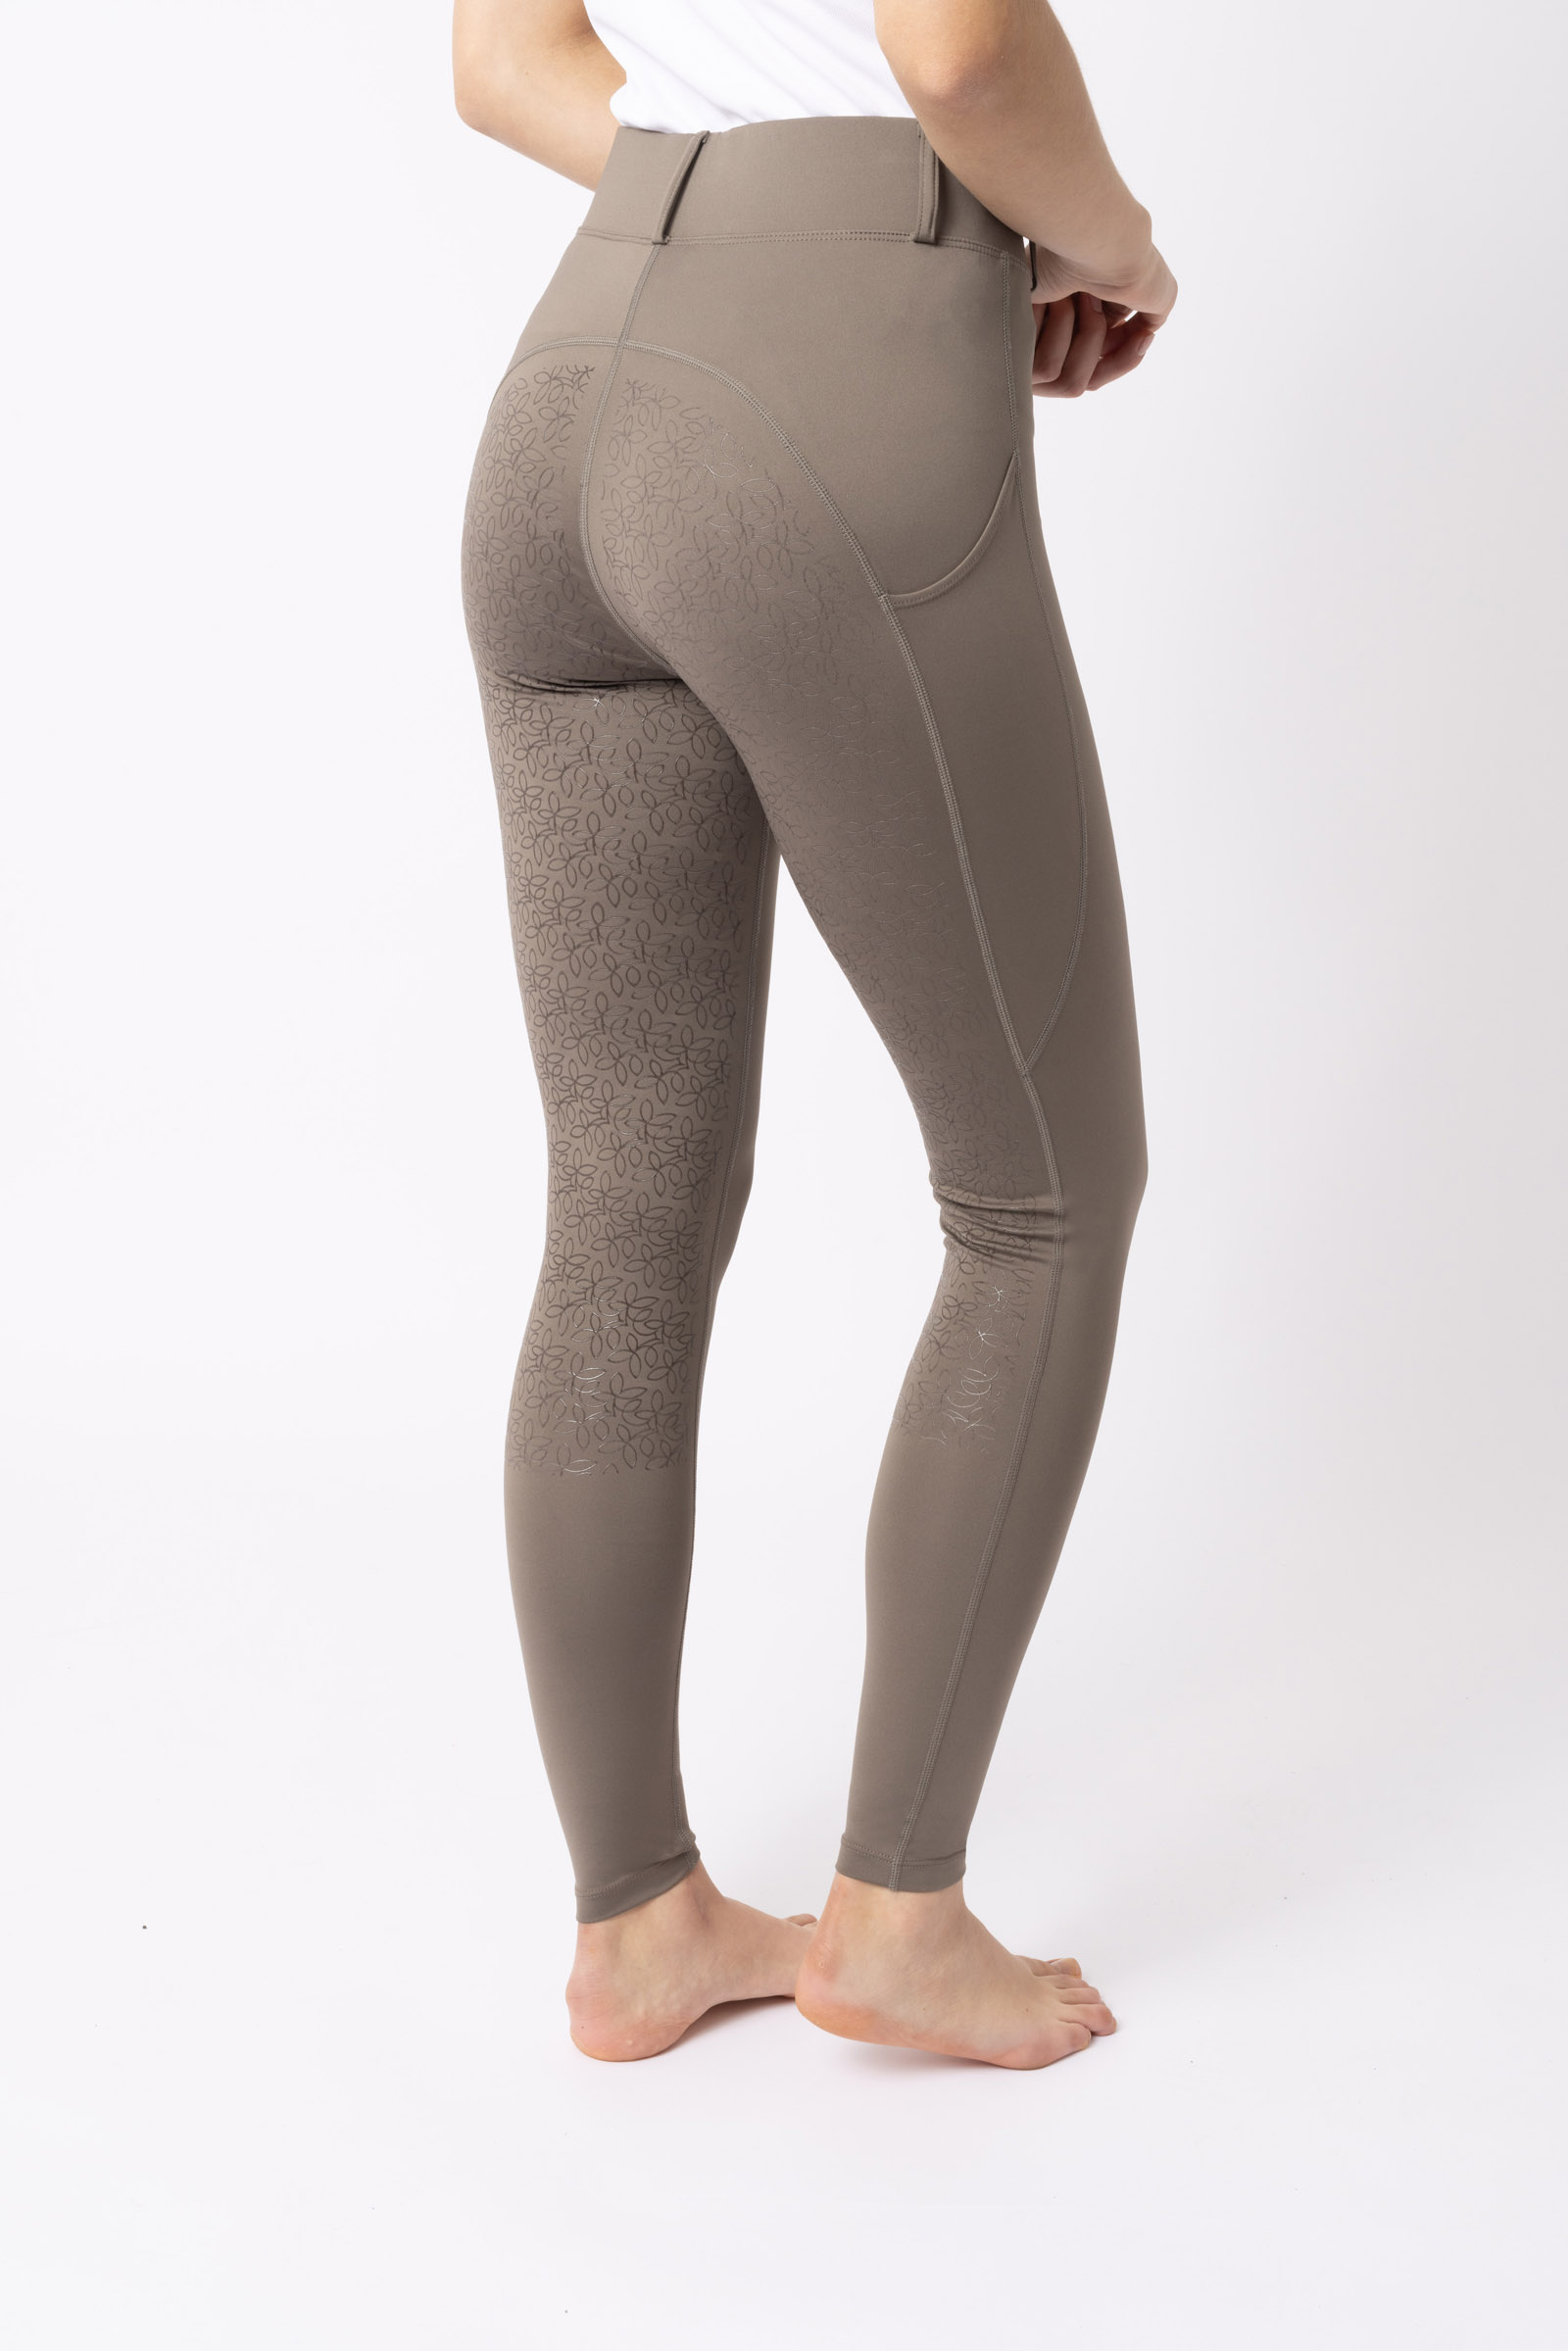 Plus Size Leggings Women Tight-fitting Pants Female Mesh Stitching Trousers